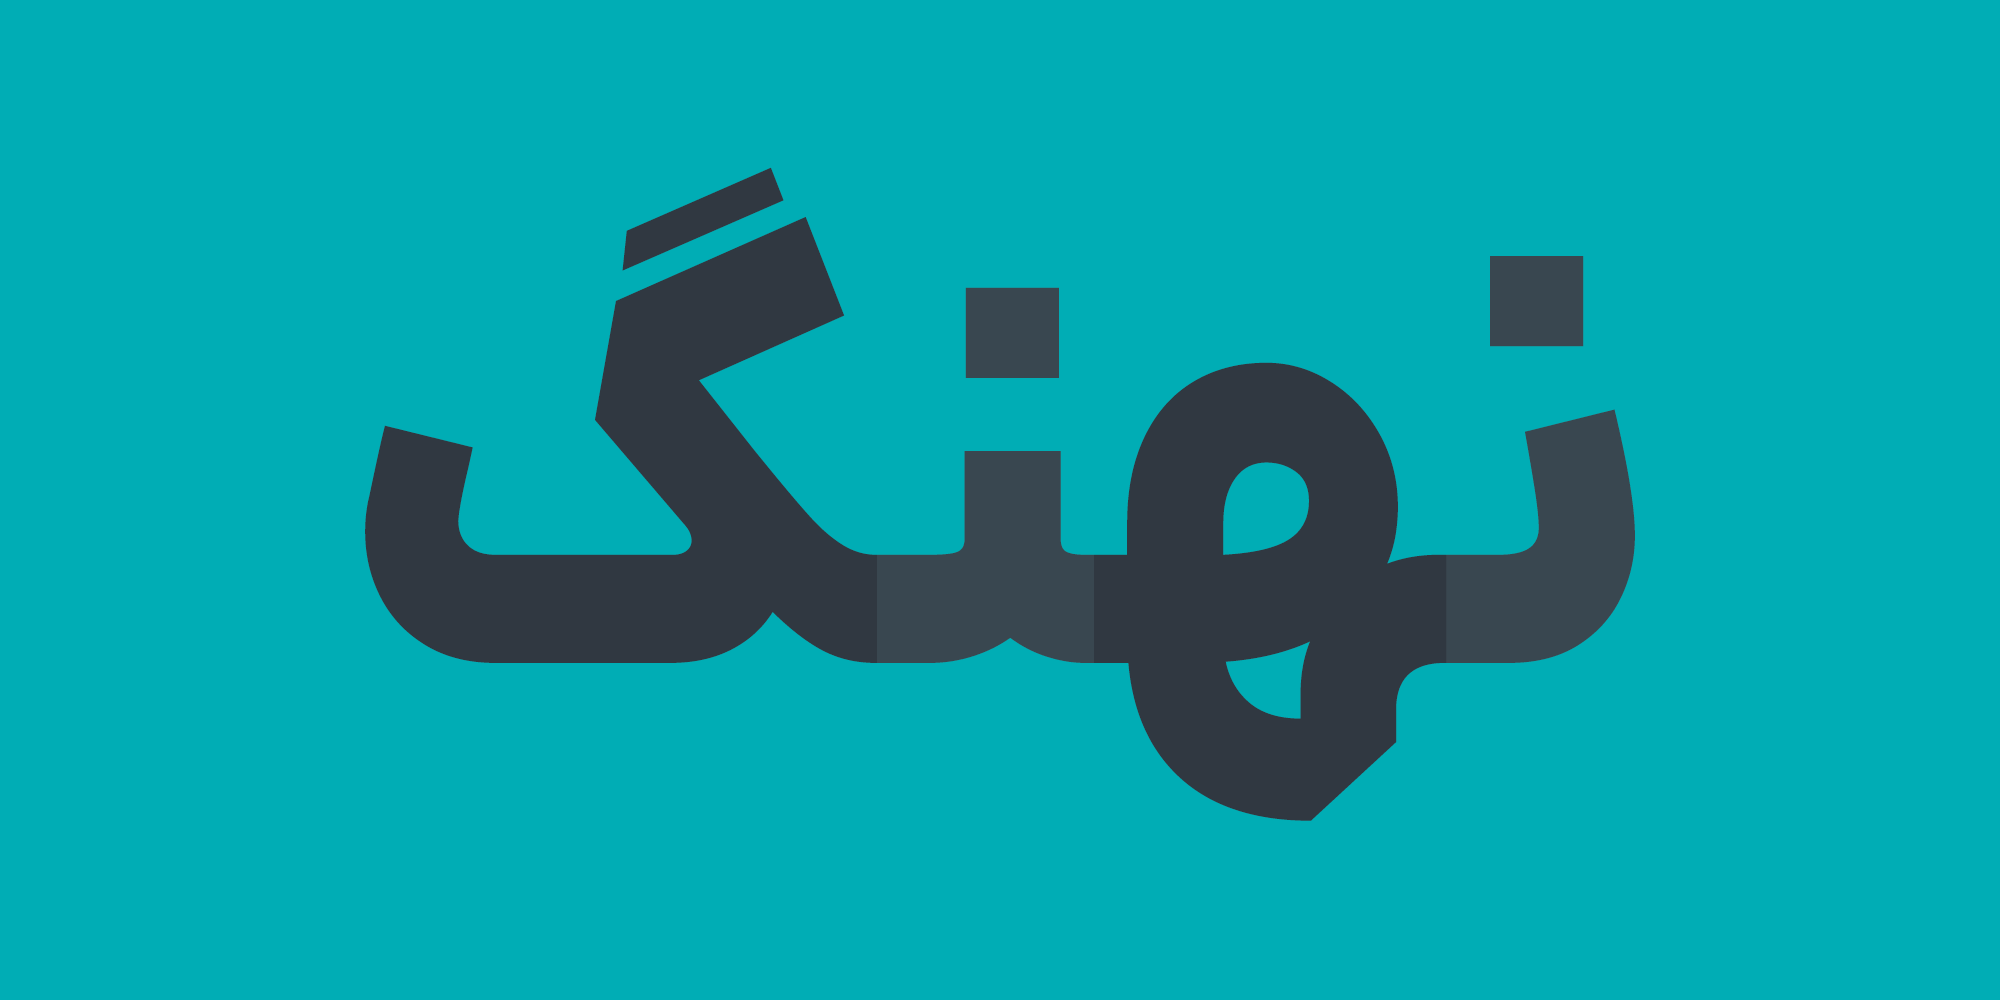 فونت ایران یکان ایکس iranyekanx font